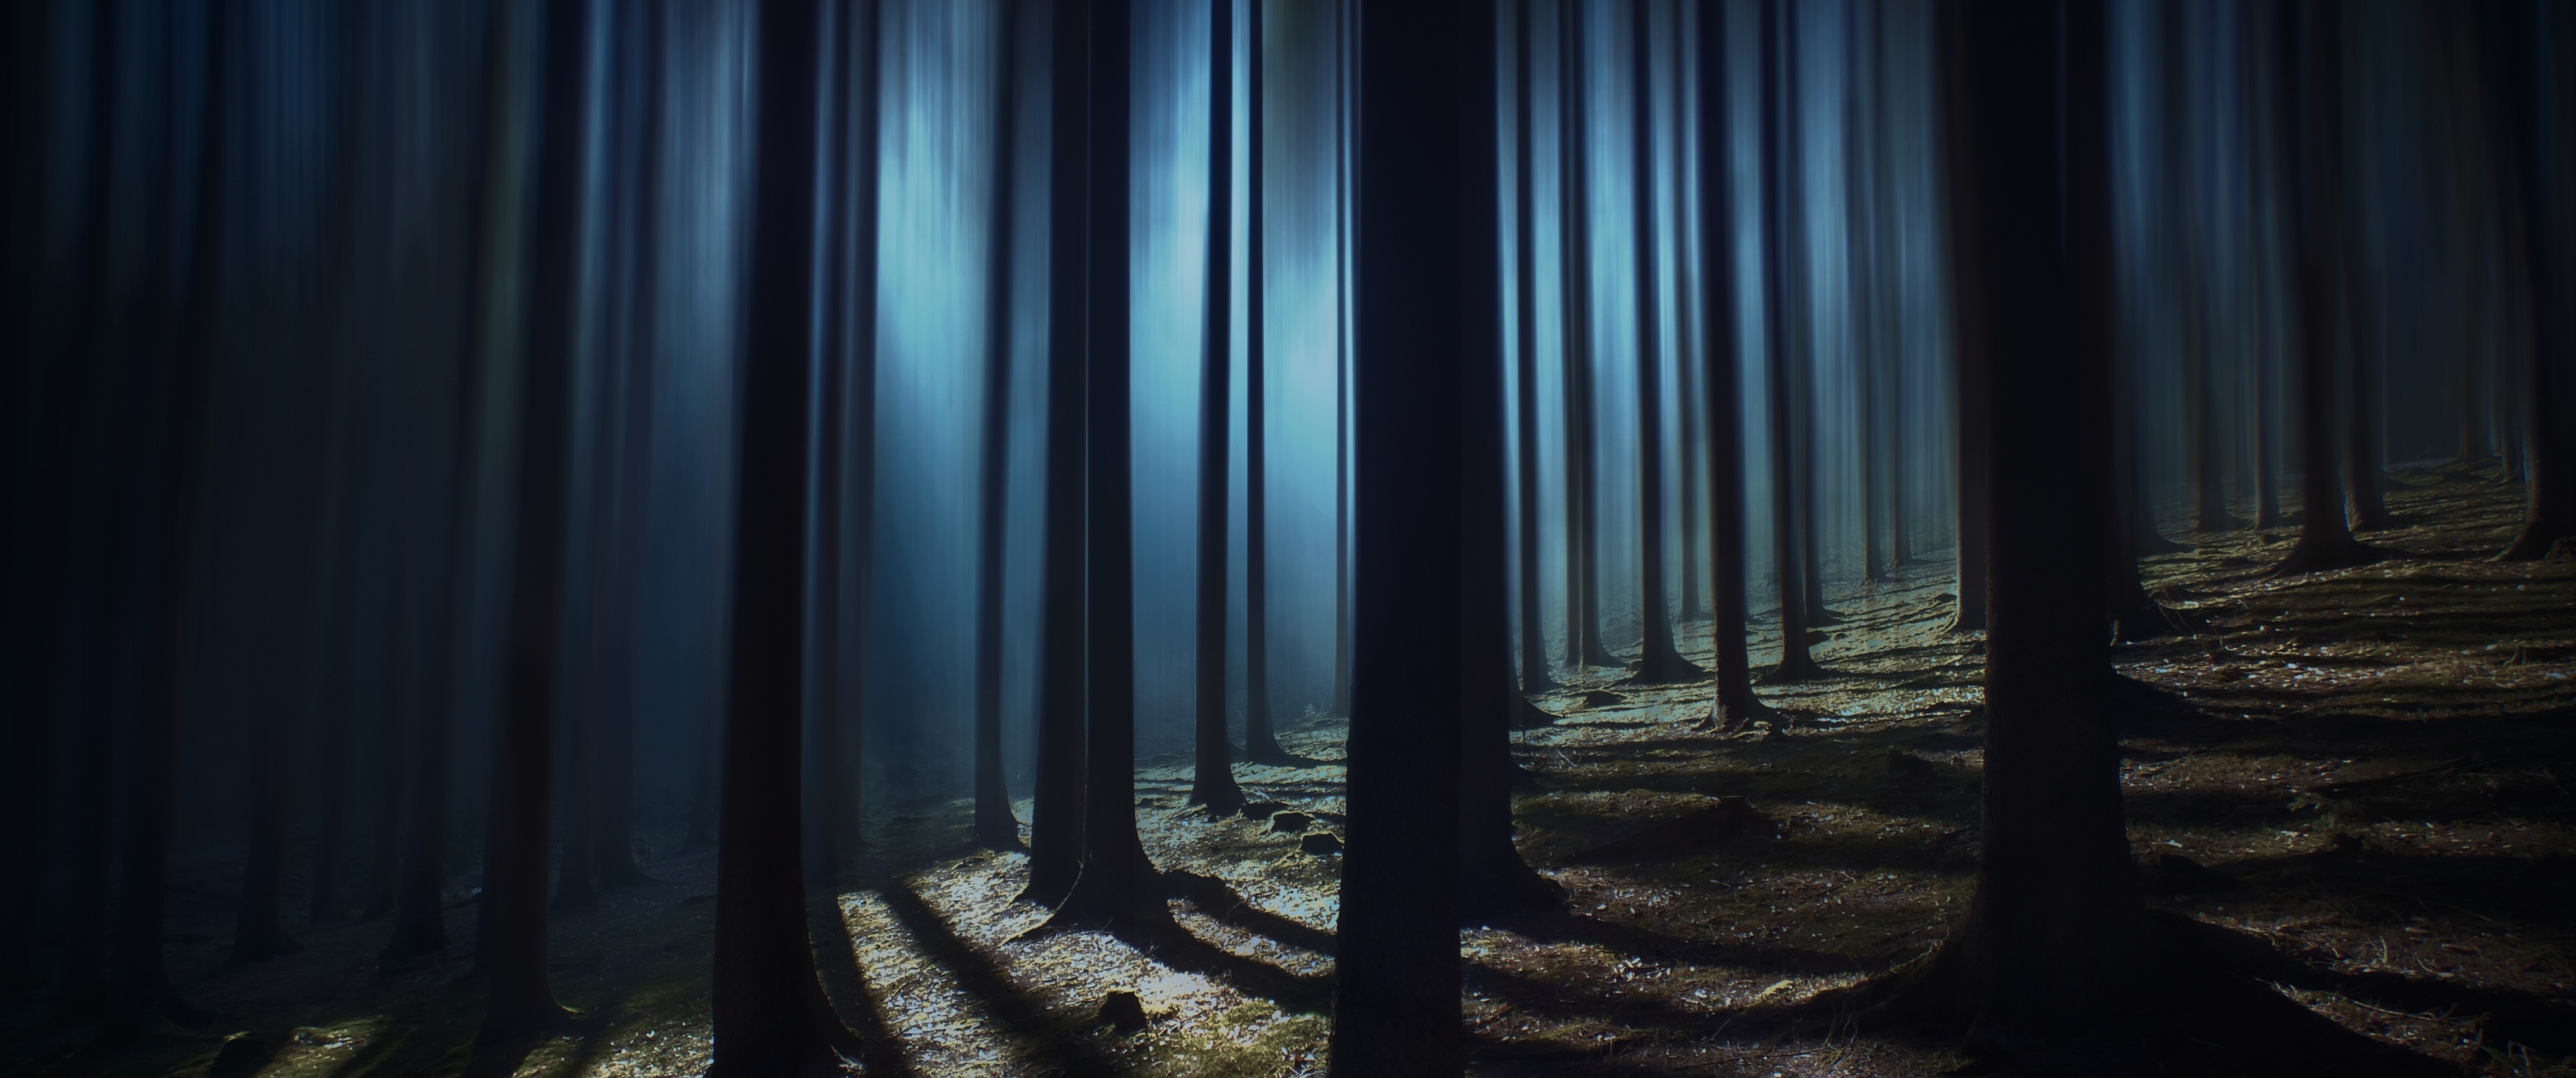 Dark forest, Nighttime woods, Tall trees, Nature, 3440x1440 Dual Screen Desktop